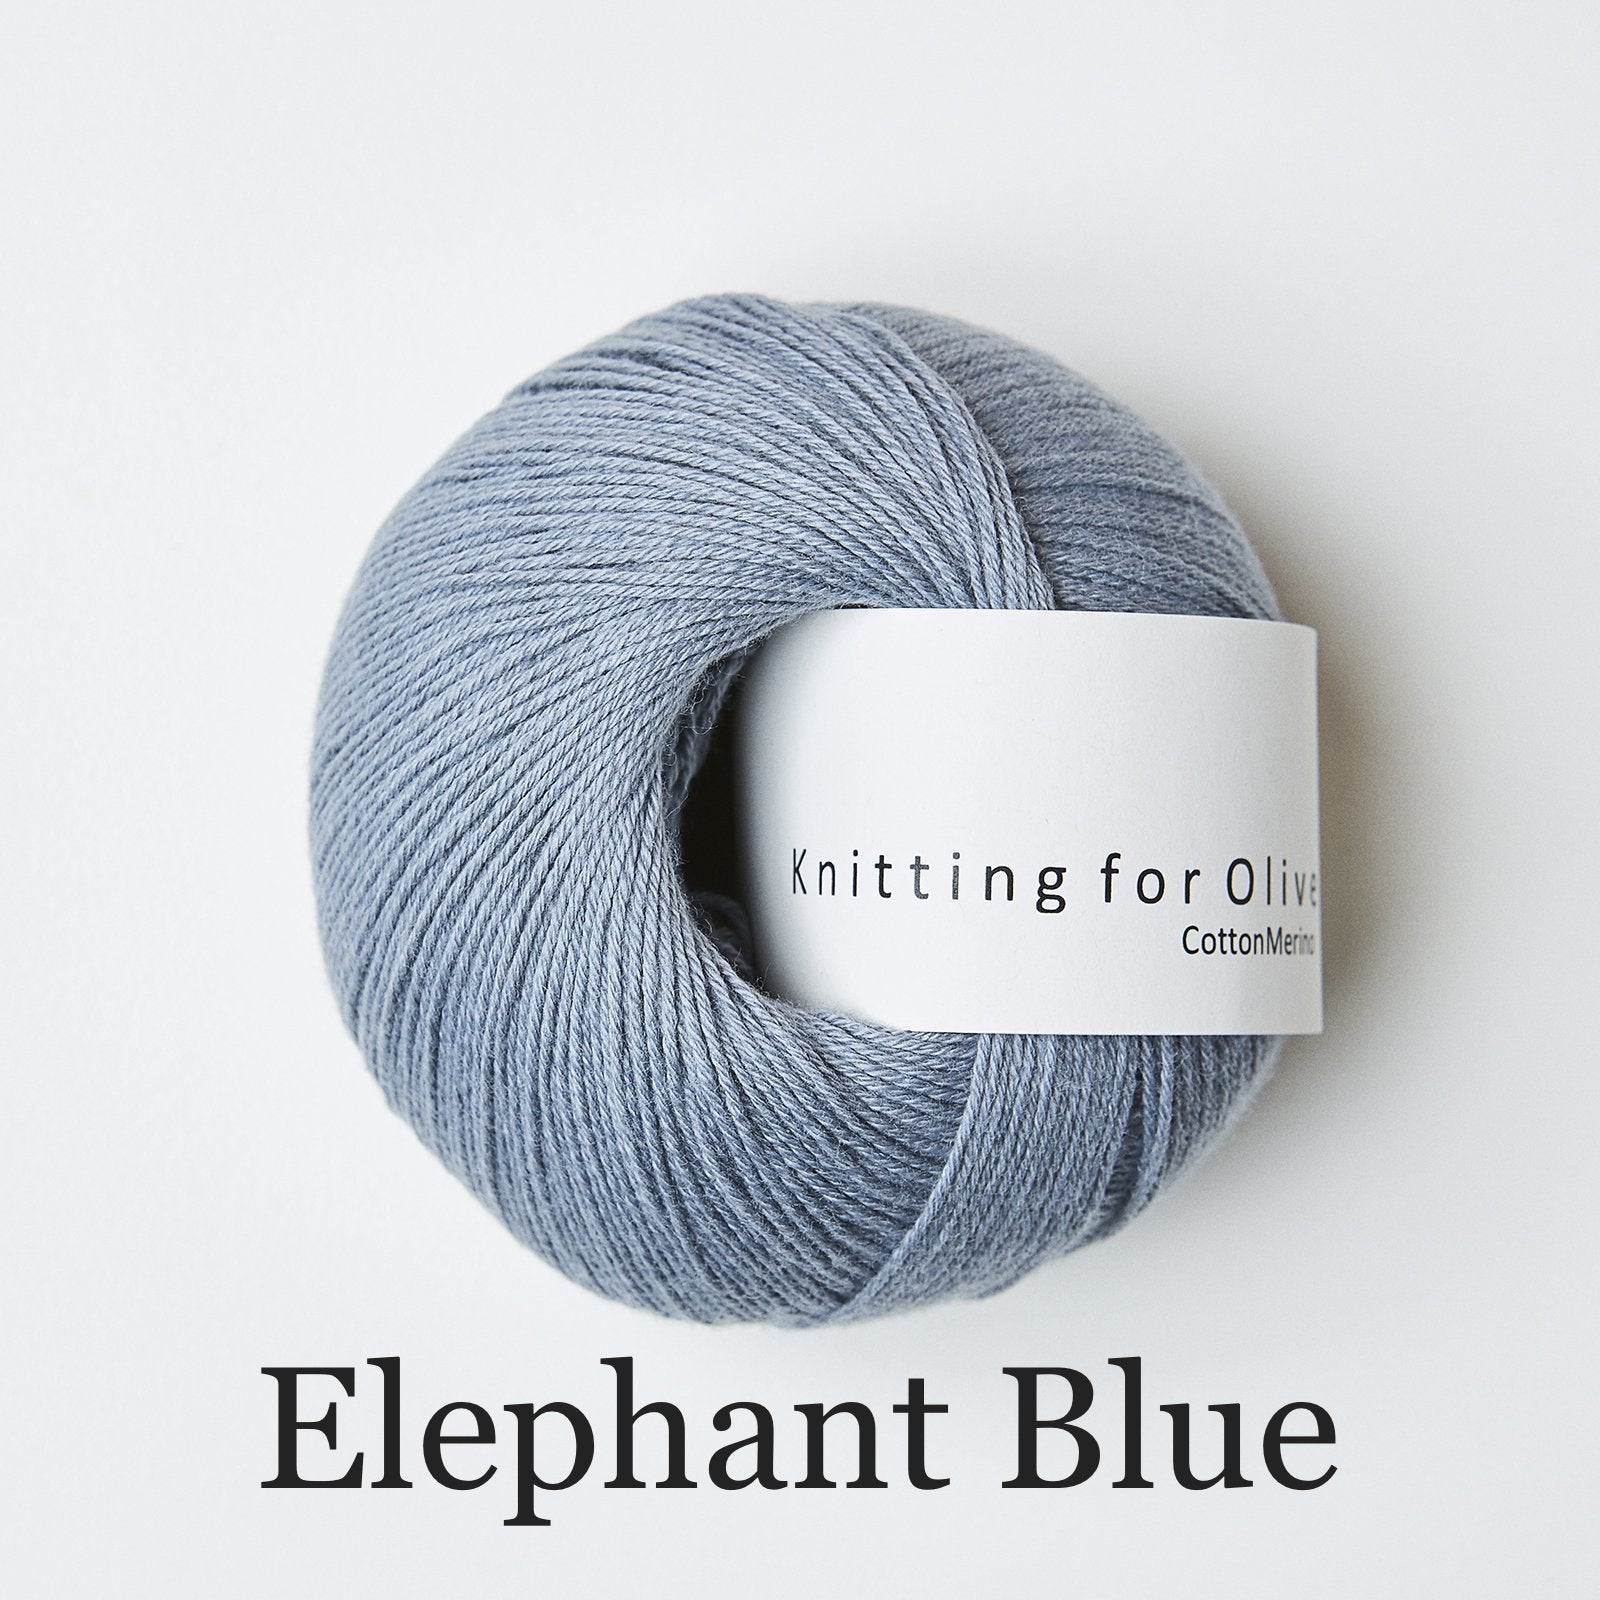 Knitting For Olive Cotton Merino, Yarn + Cø